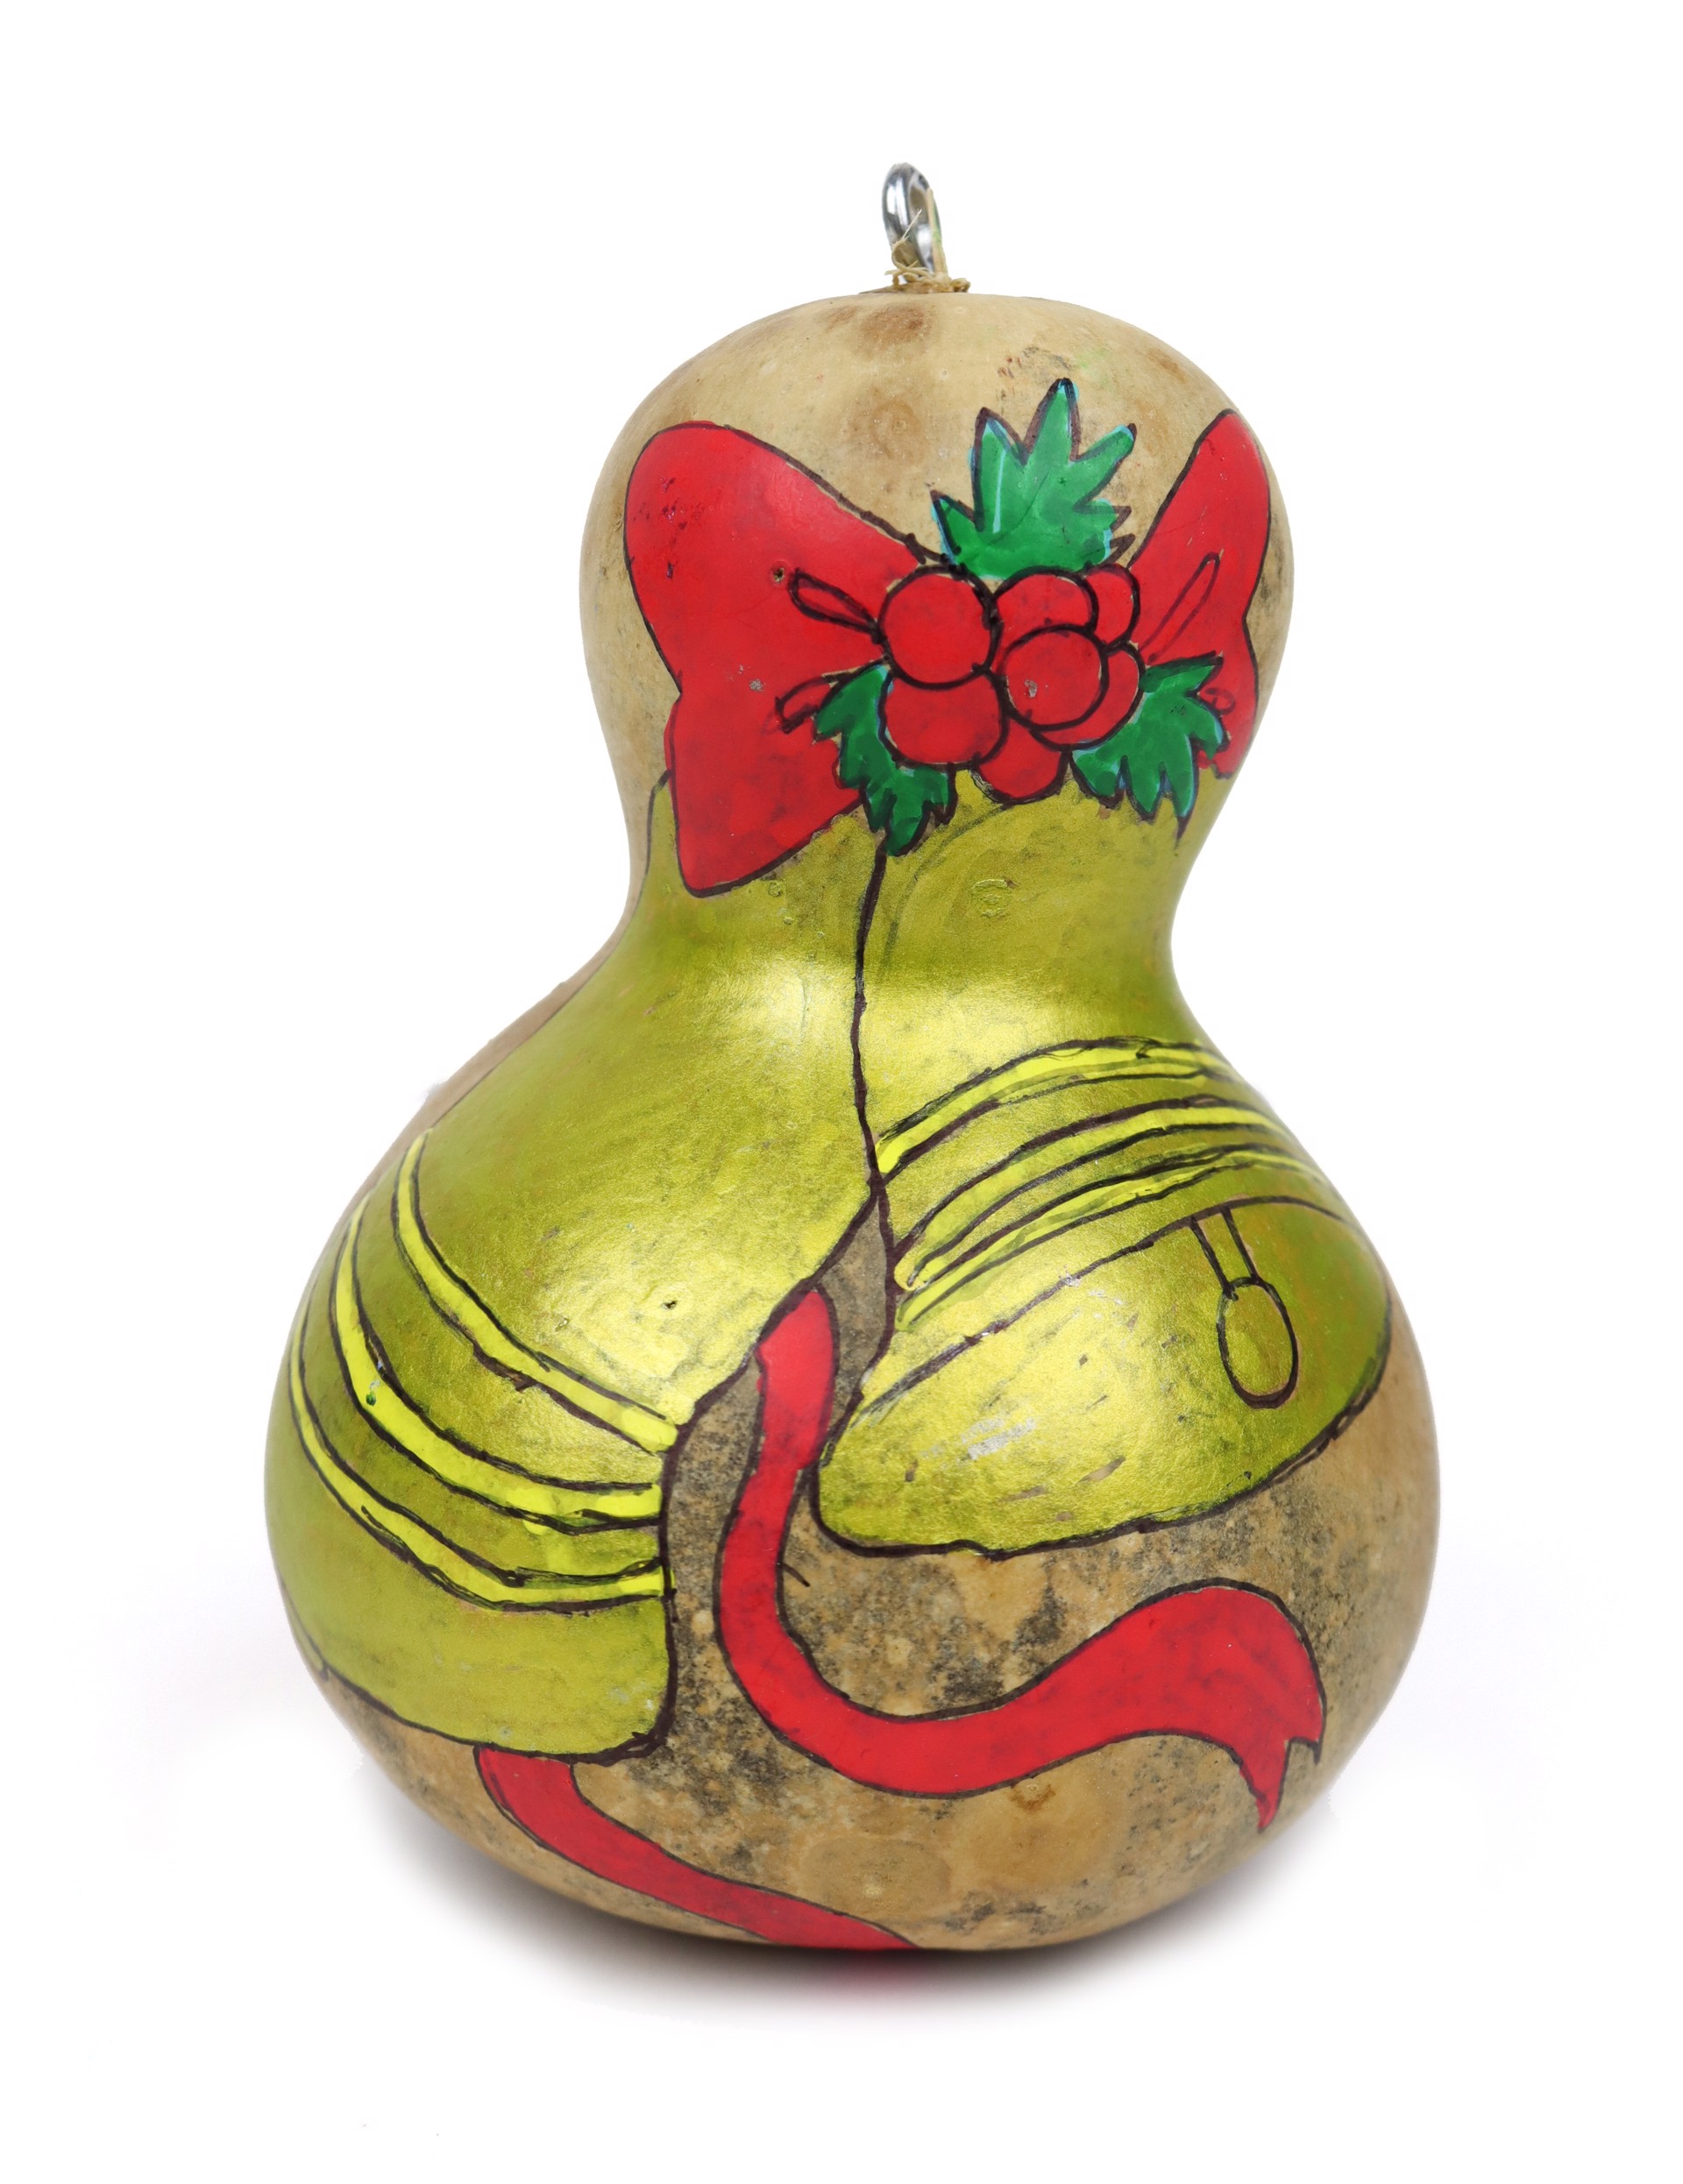 Winter Bells (gourd ornament) by Jacqueline Coleman